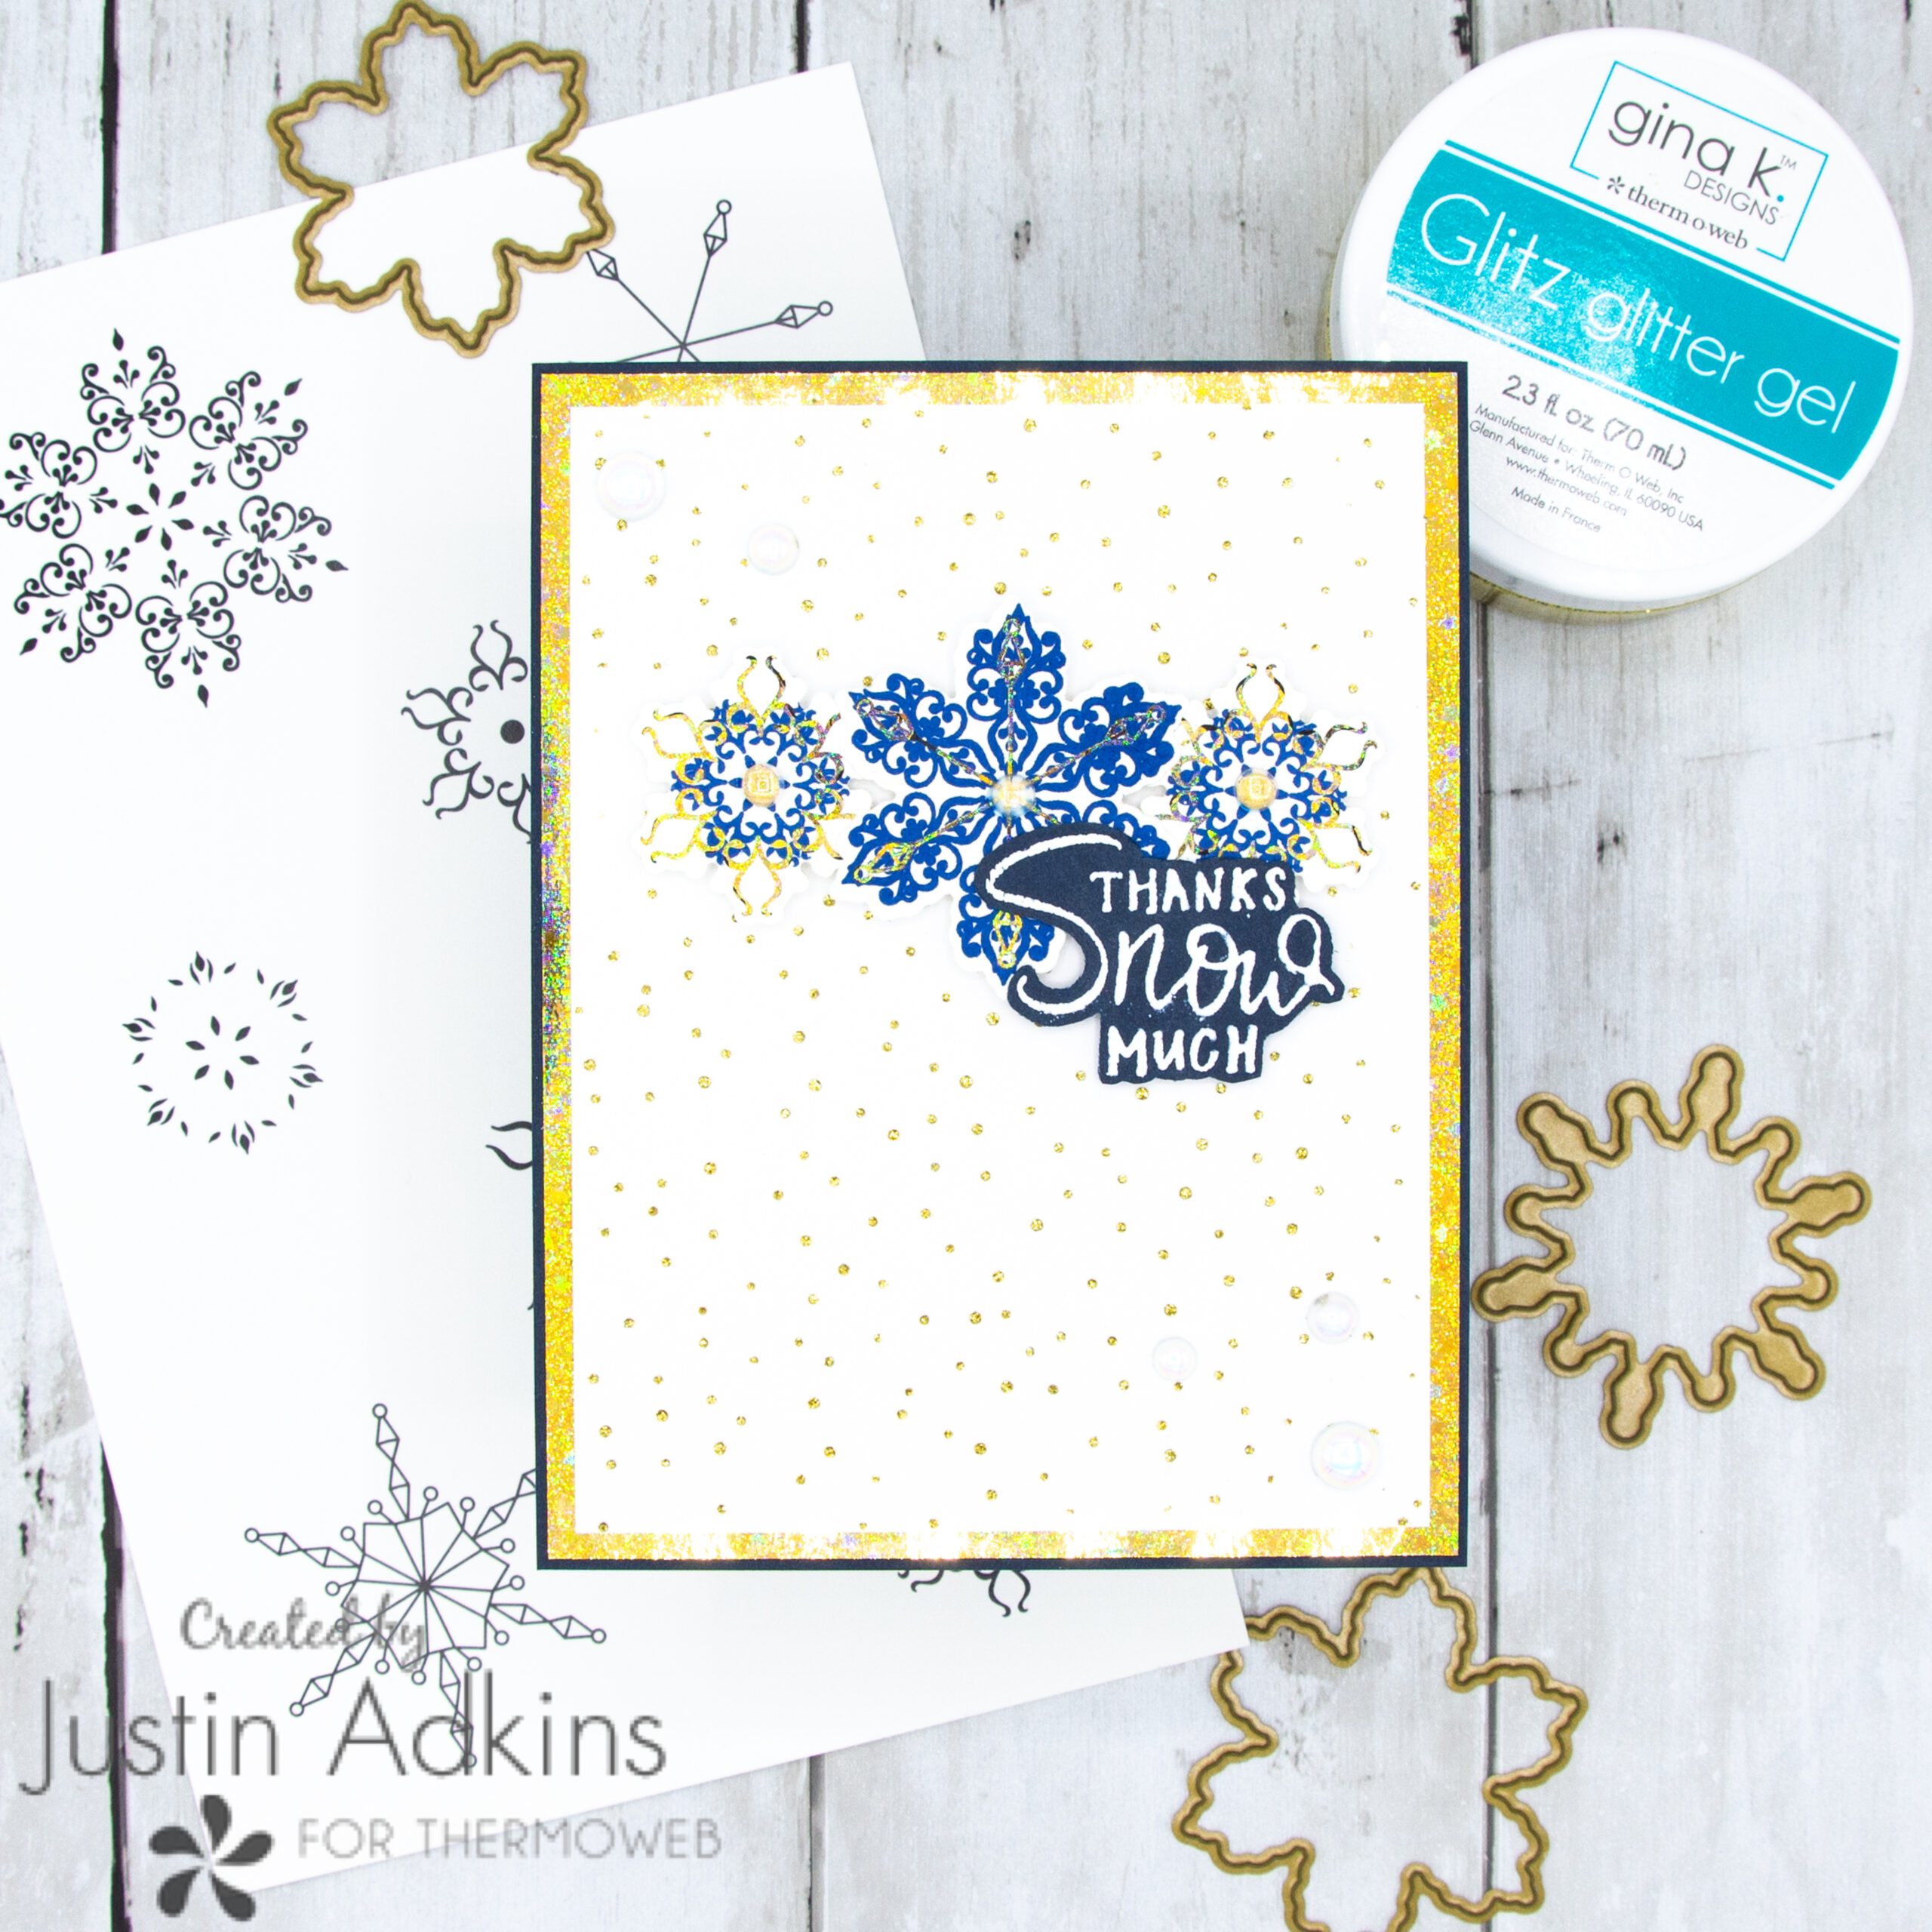 Gina K Designs - Clear Stamp - Snowflake Builder